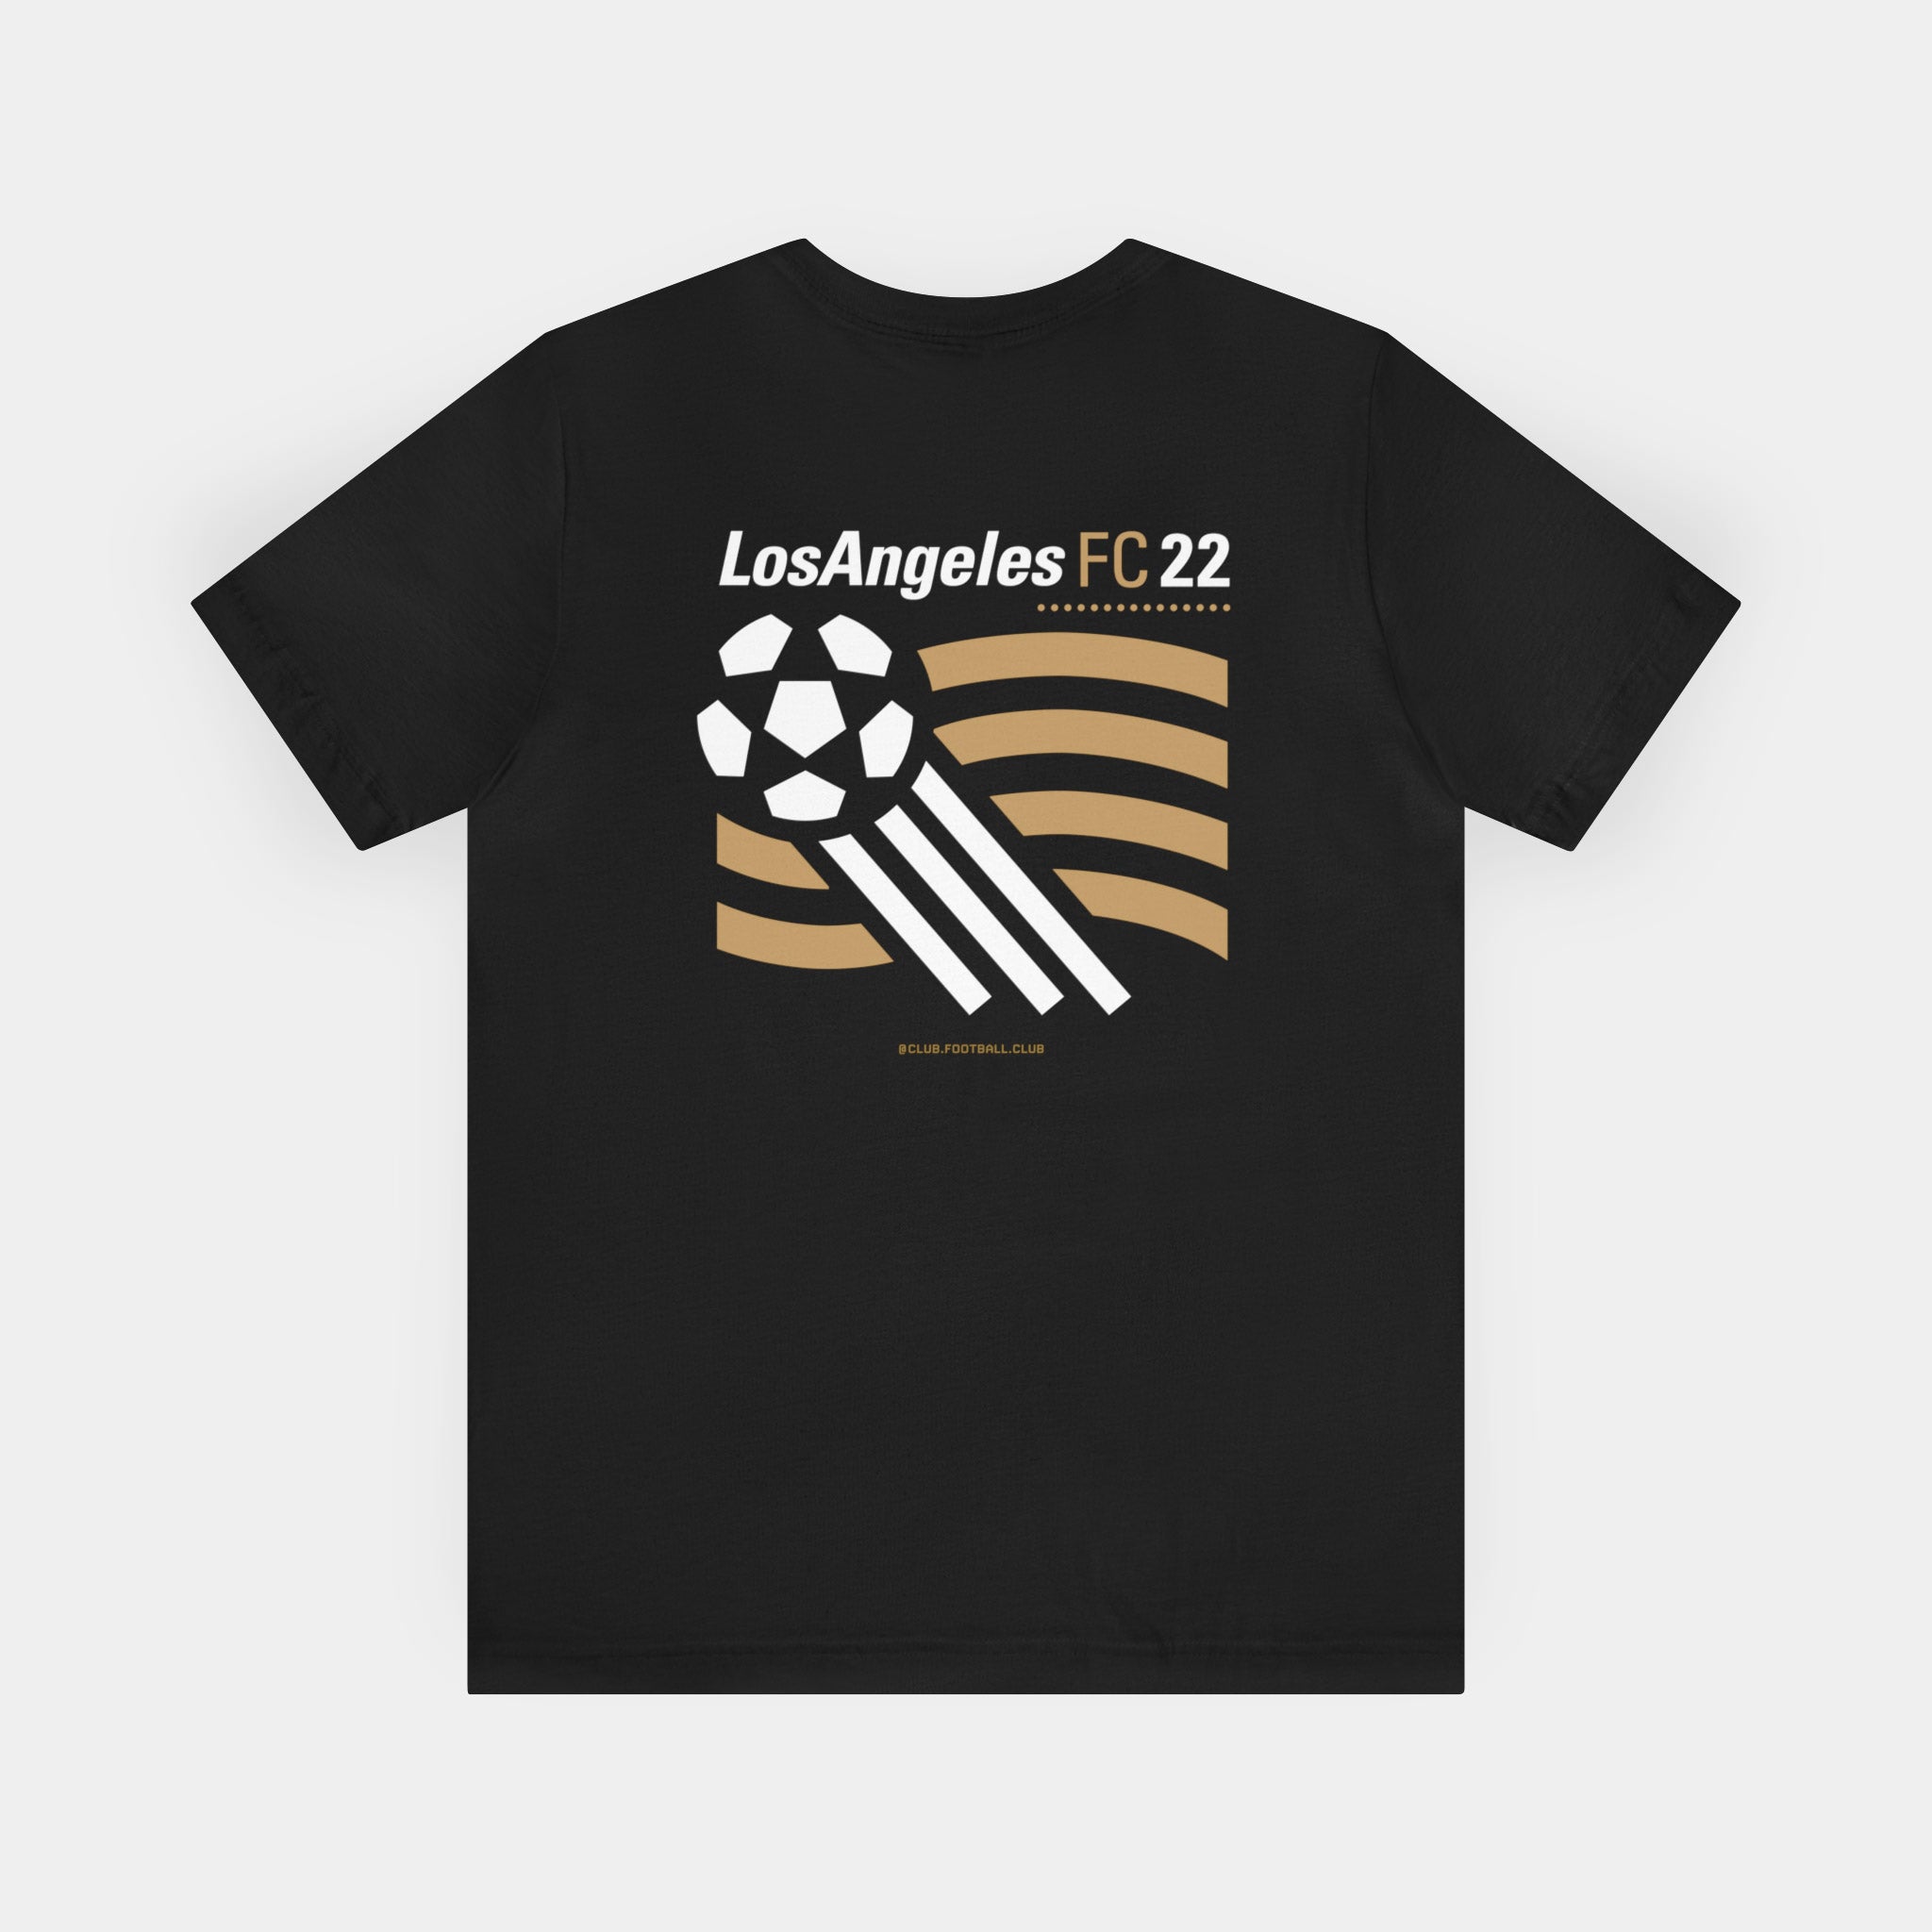 Making Soccer History (LAFC) T-shirt